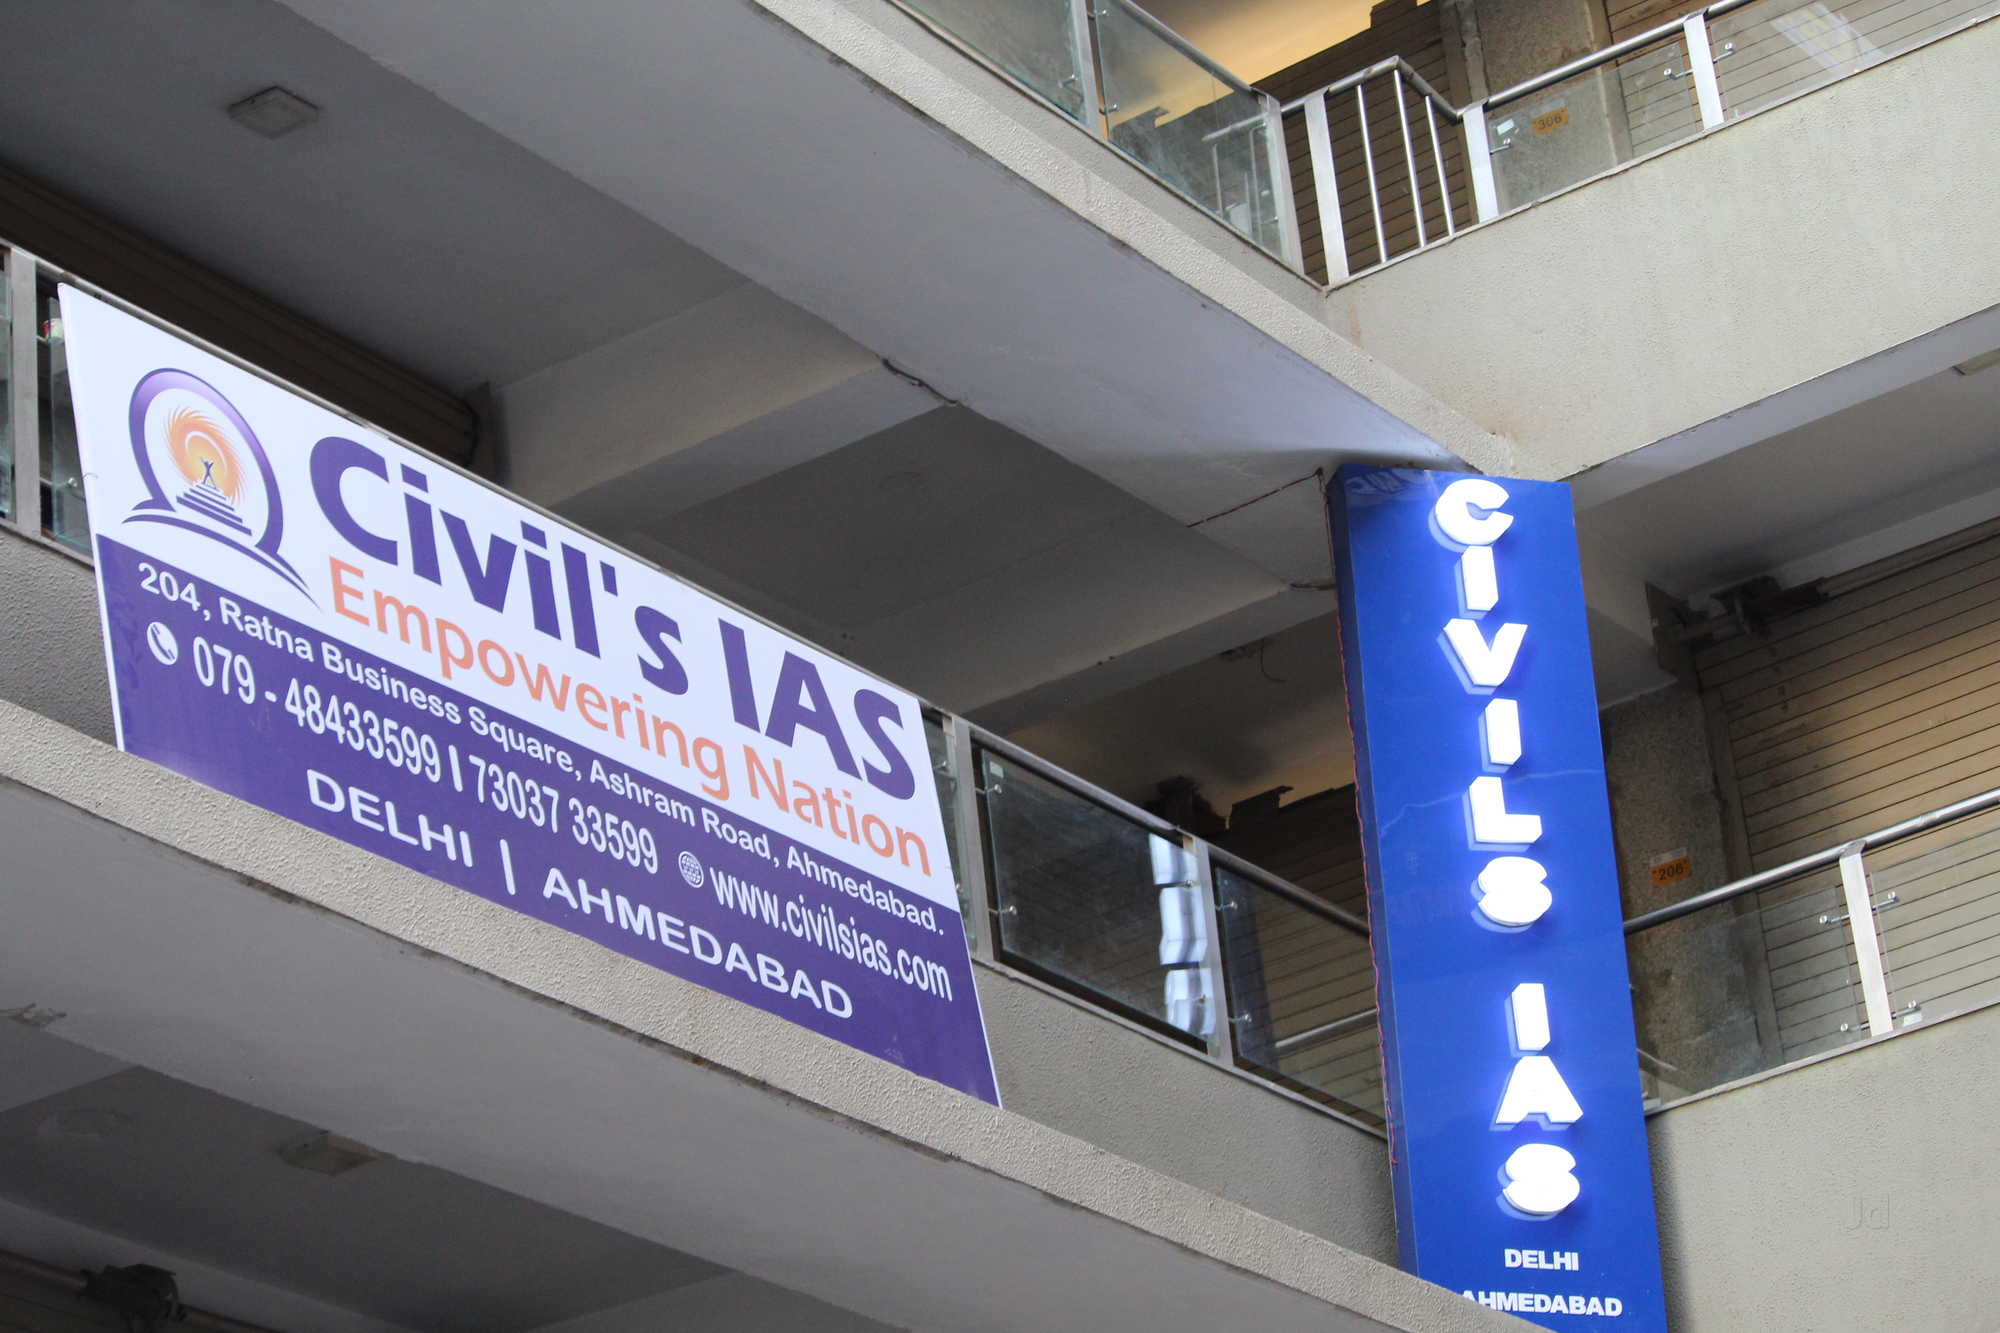 CIVIL'S IAS ACADEMY - ClassDigest.com - Find best preschools, schools,  coaching centers & tutors at near by